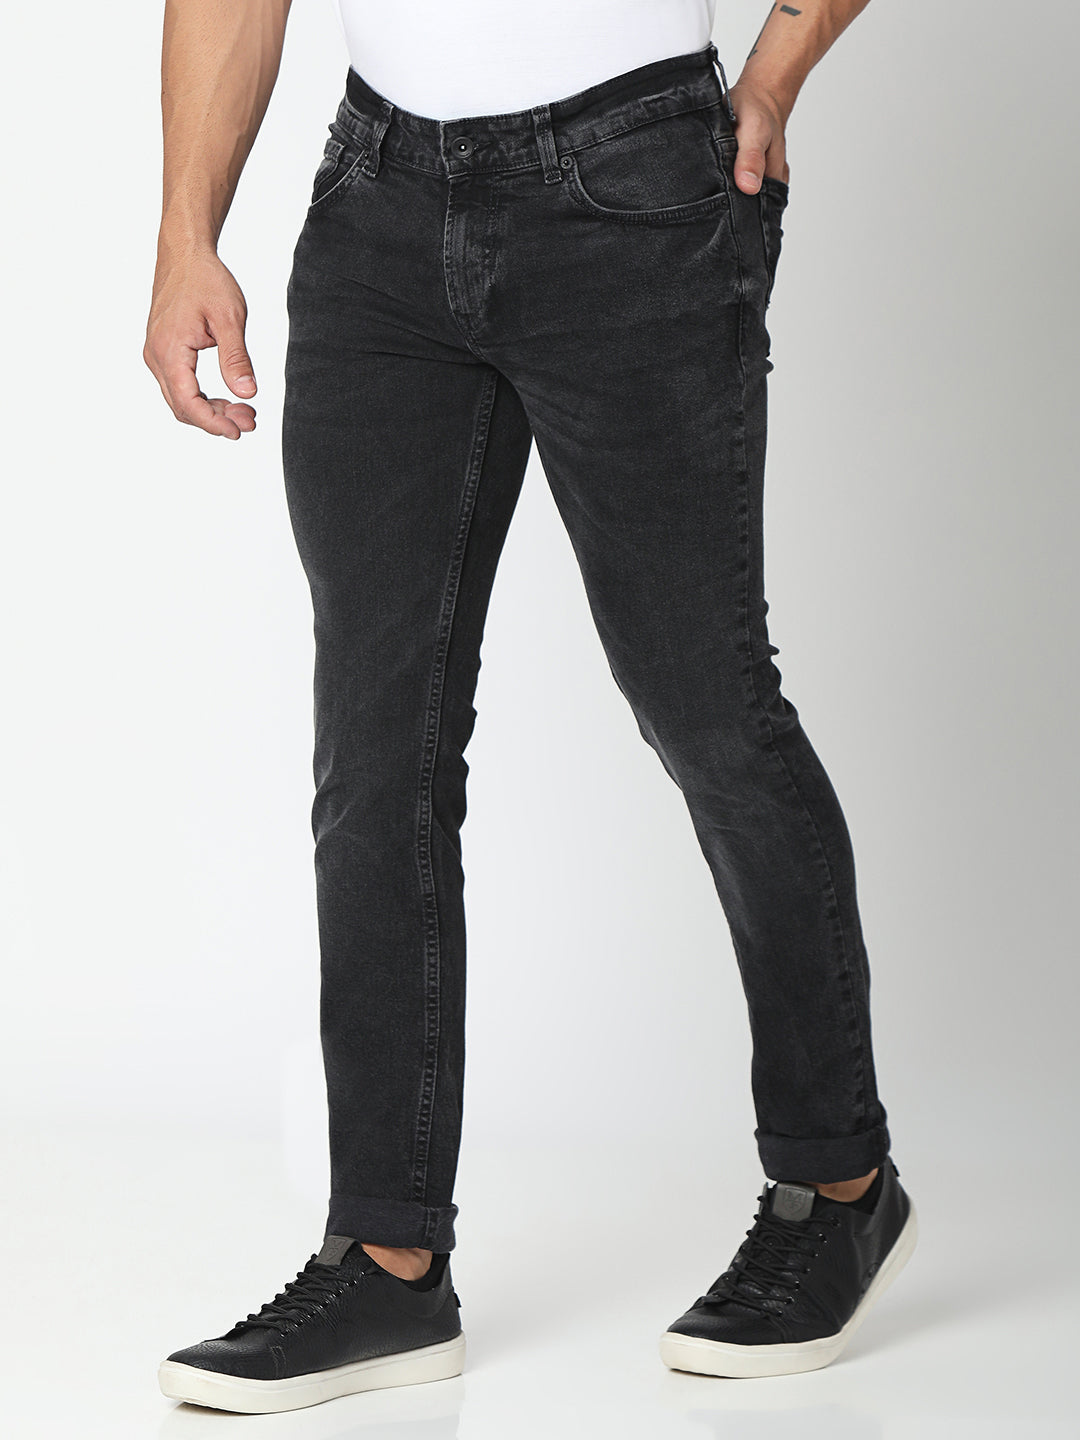 Spykar Charcoal Black Slim Fit Narrow Length Jeans For Men (Skinny)